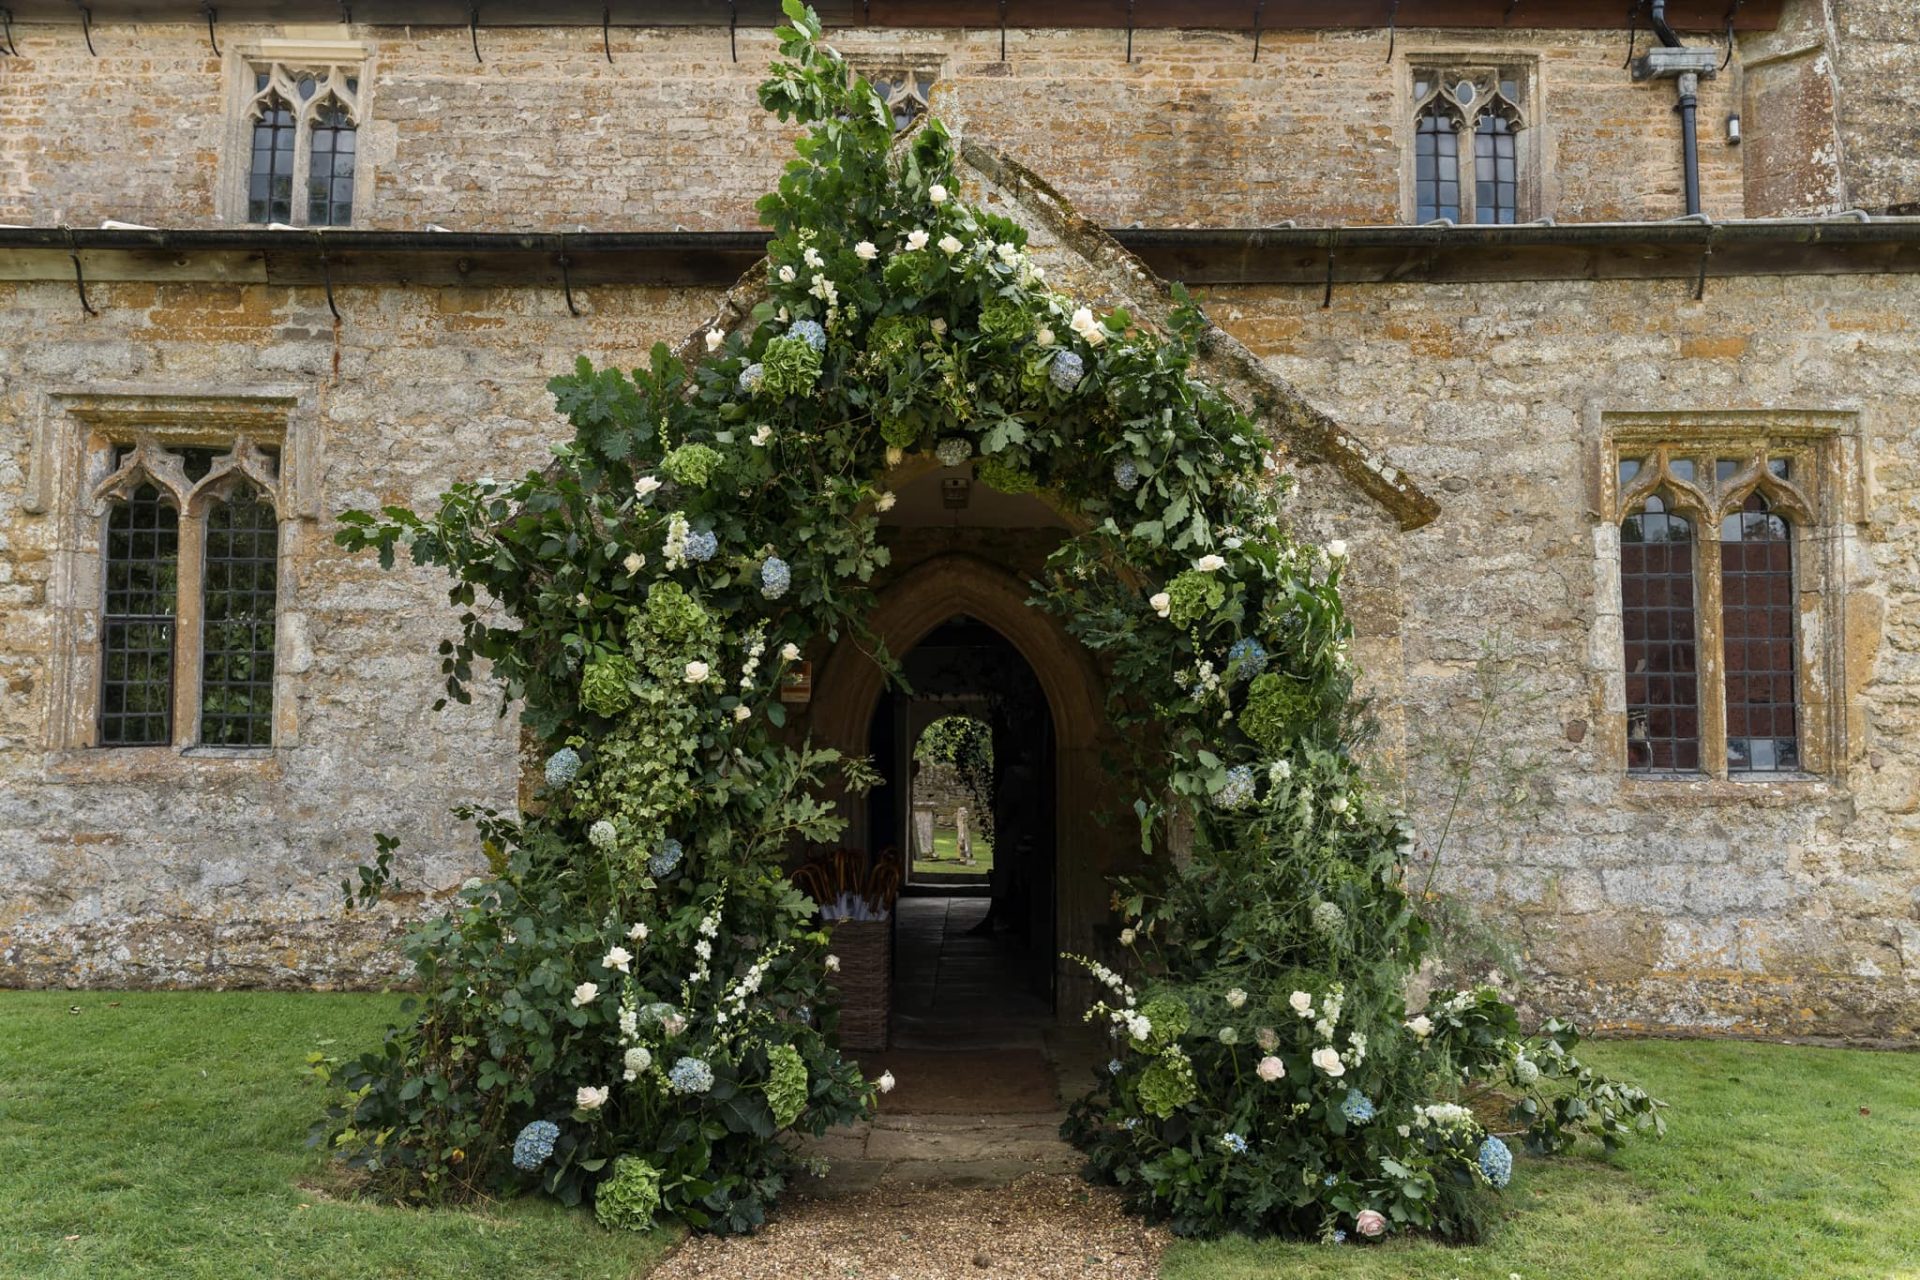 Wild wedding floral arch at church entrance